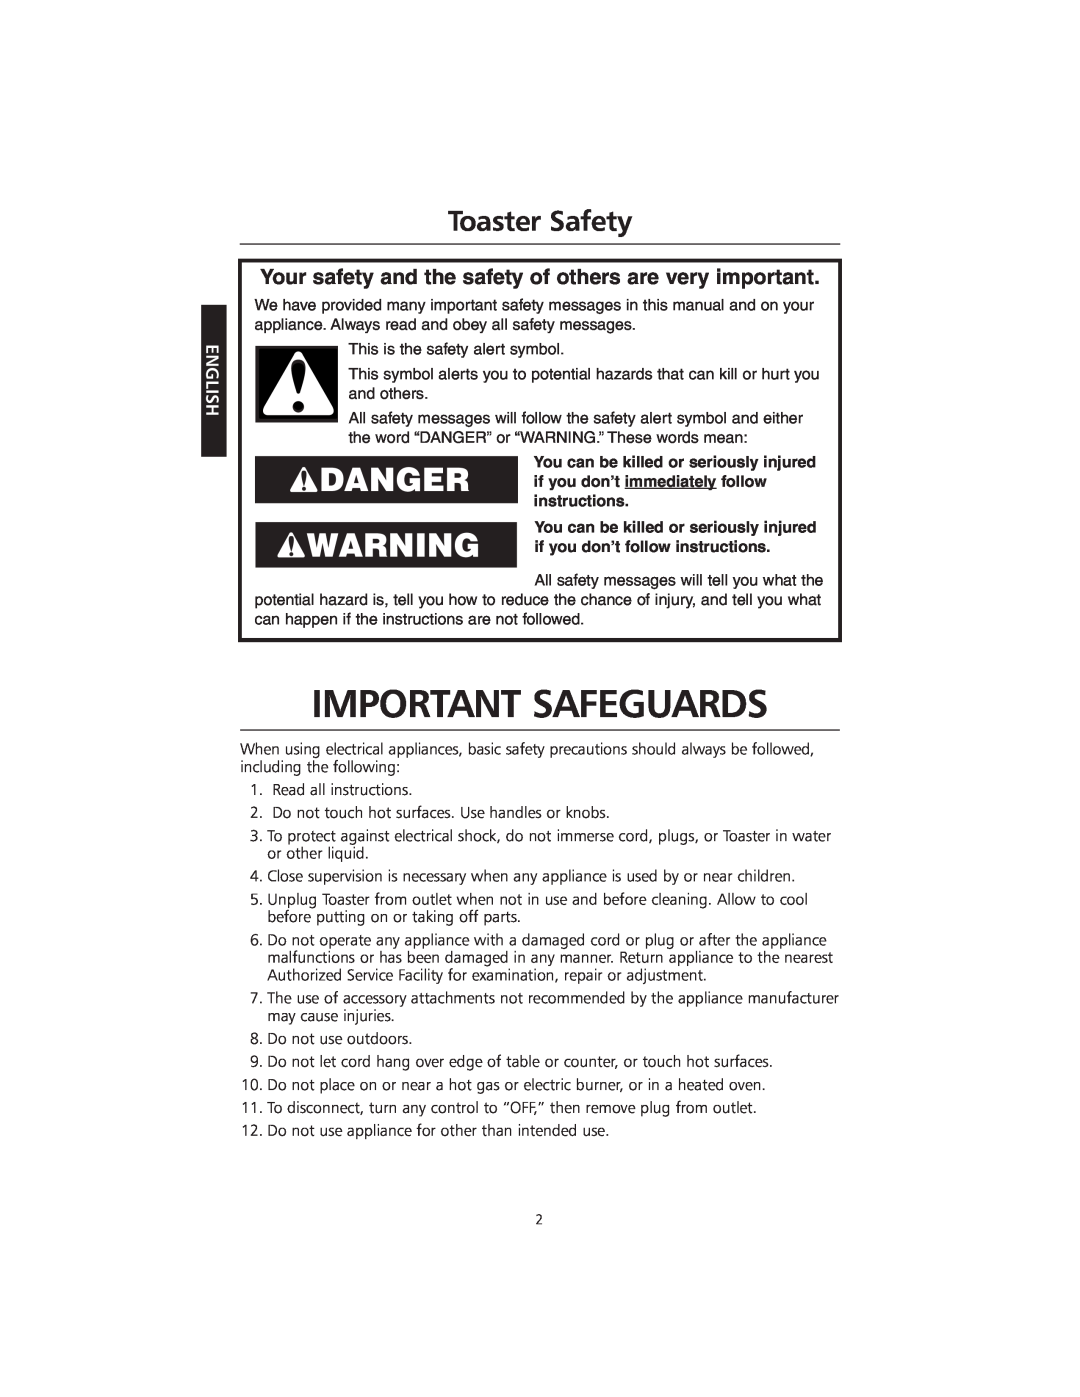 KitchenAid KMTT400 manual Important Safeguards, Toaster Safety, Danger, English 